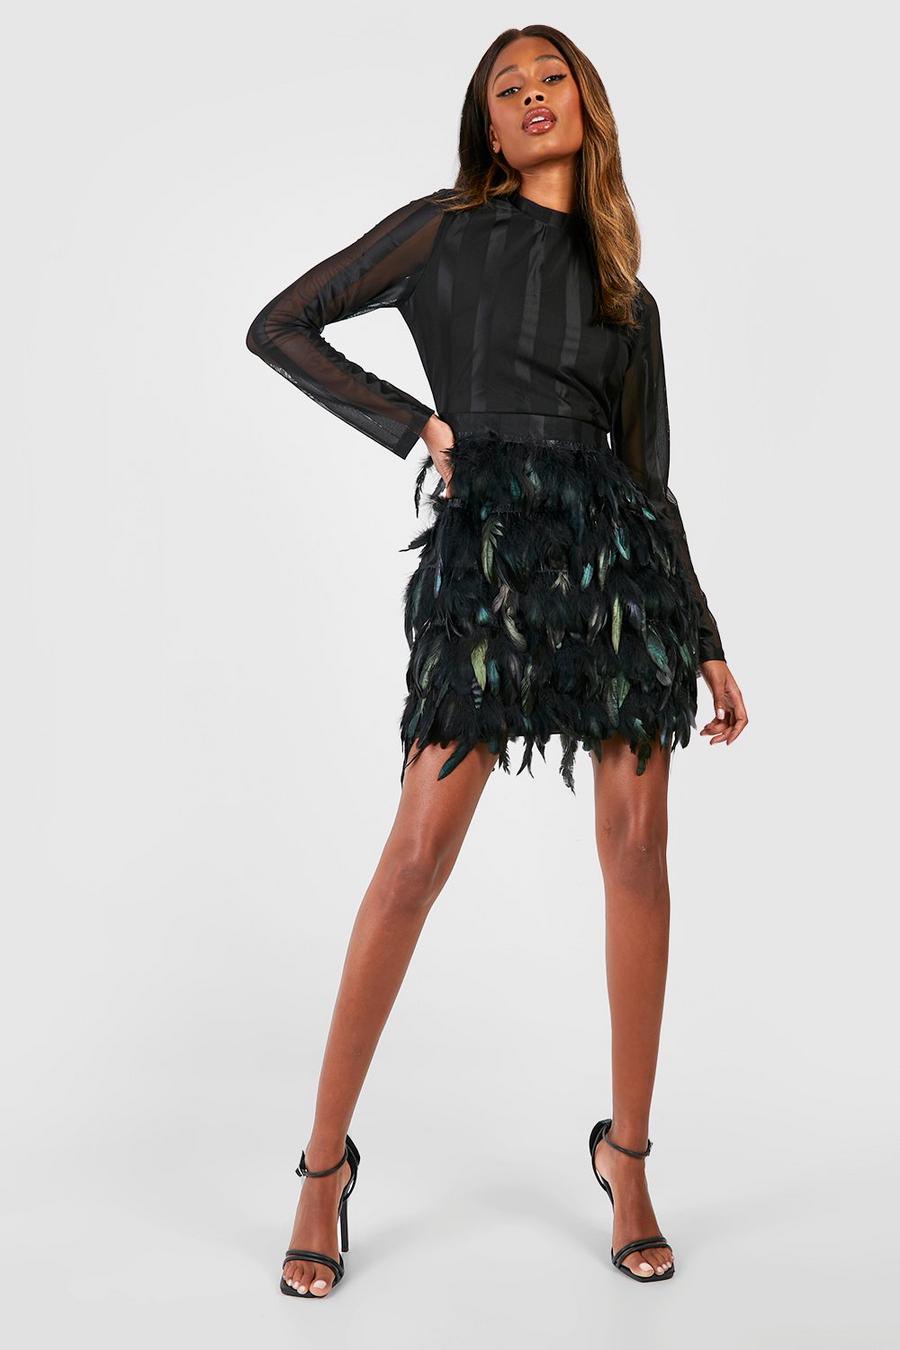 Black schwarz High Neck Feather Skirt Mini Party Dress